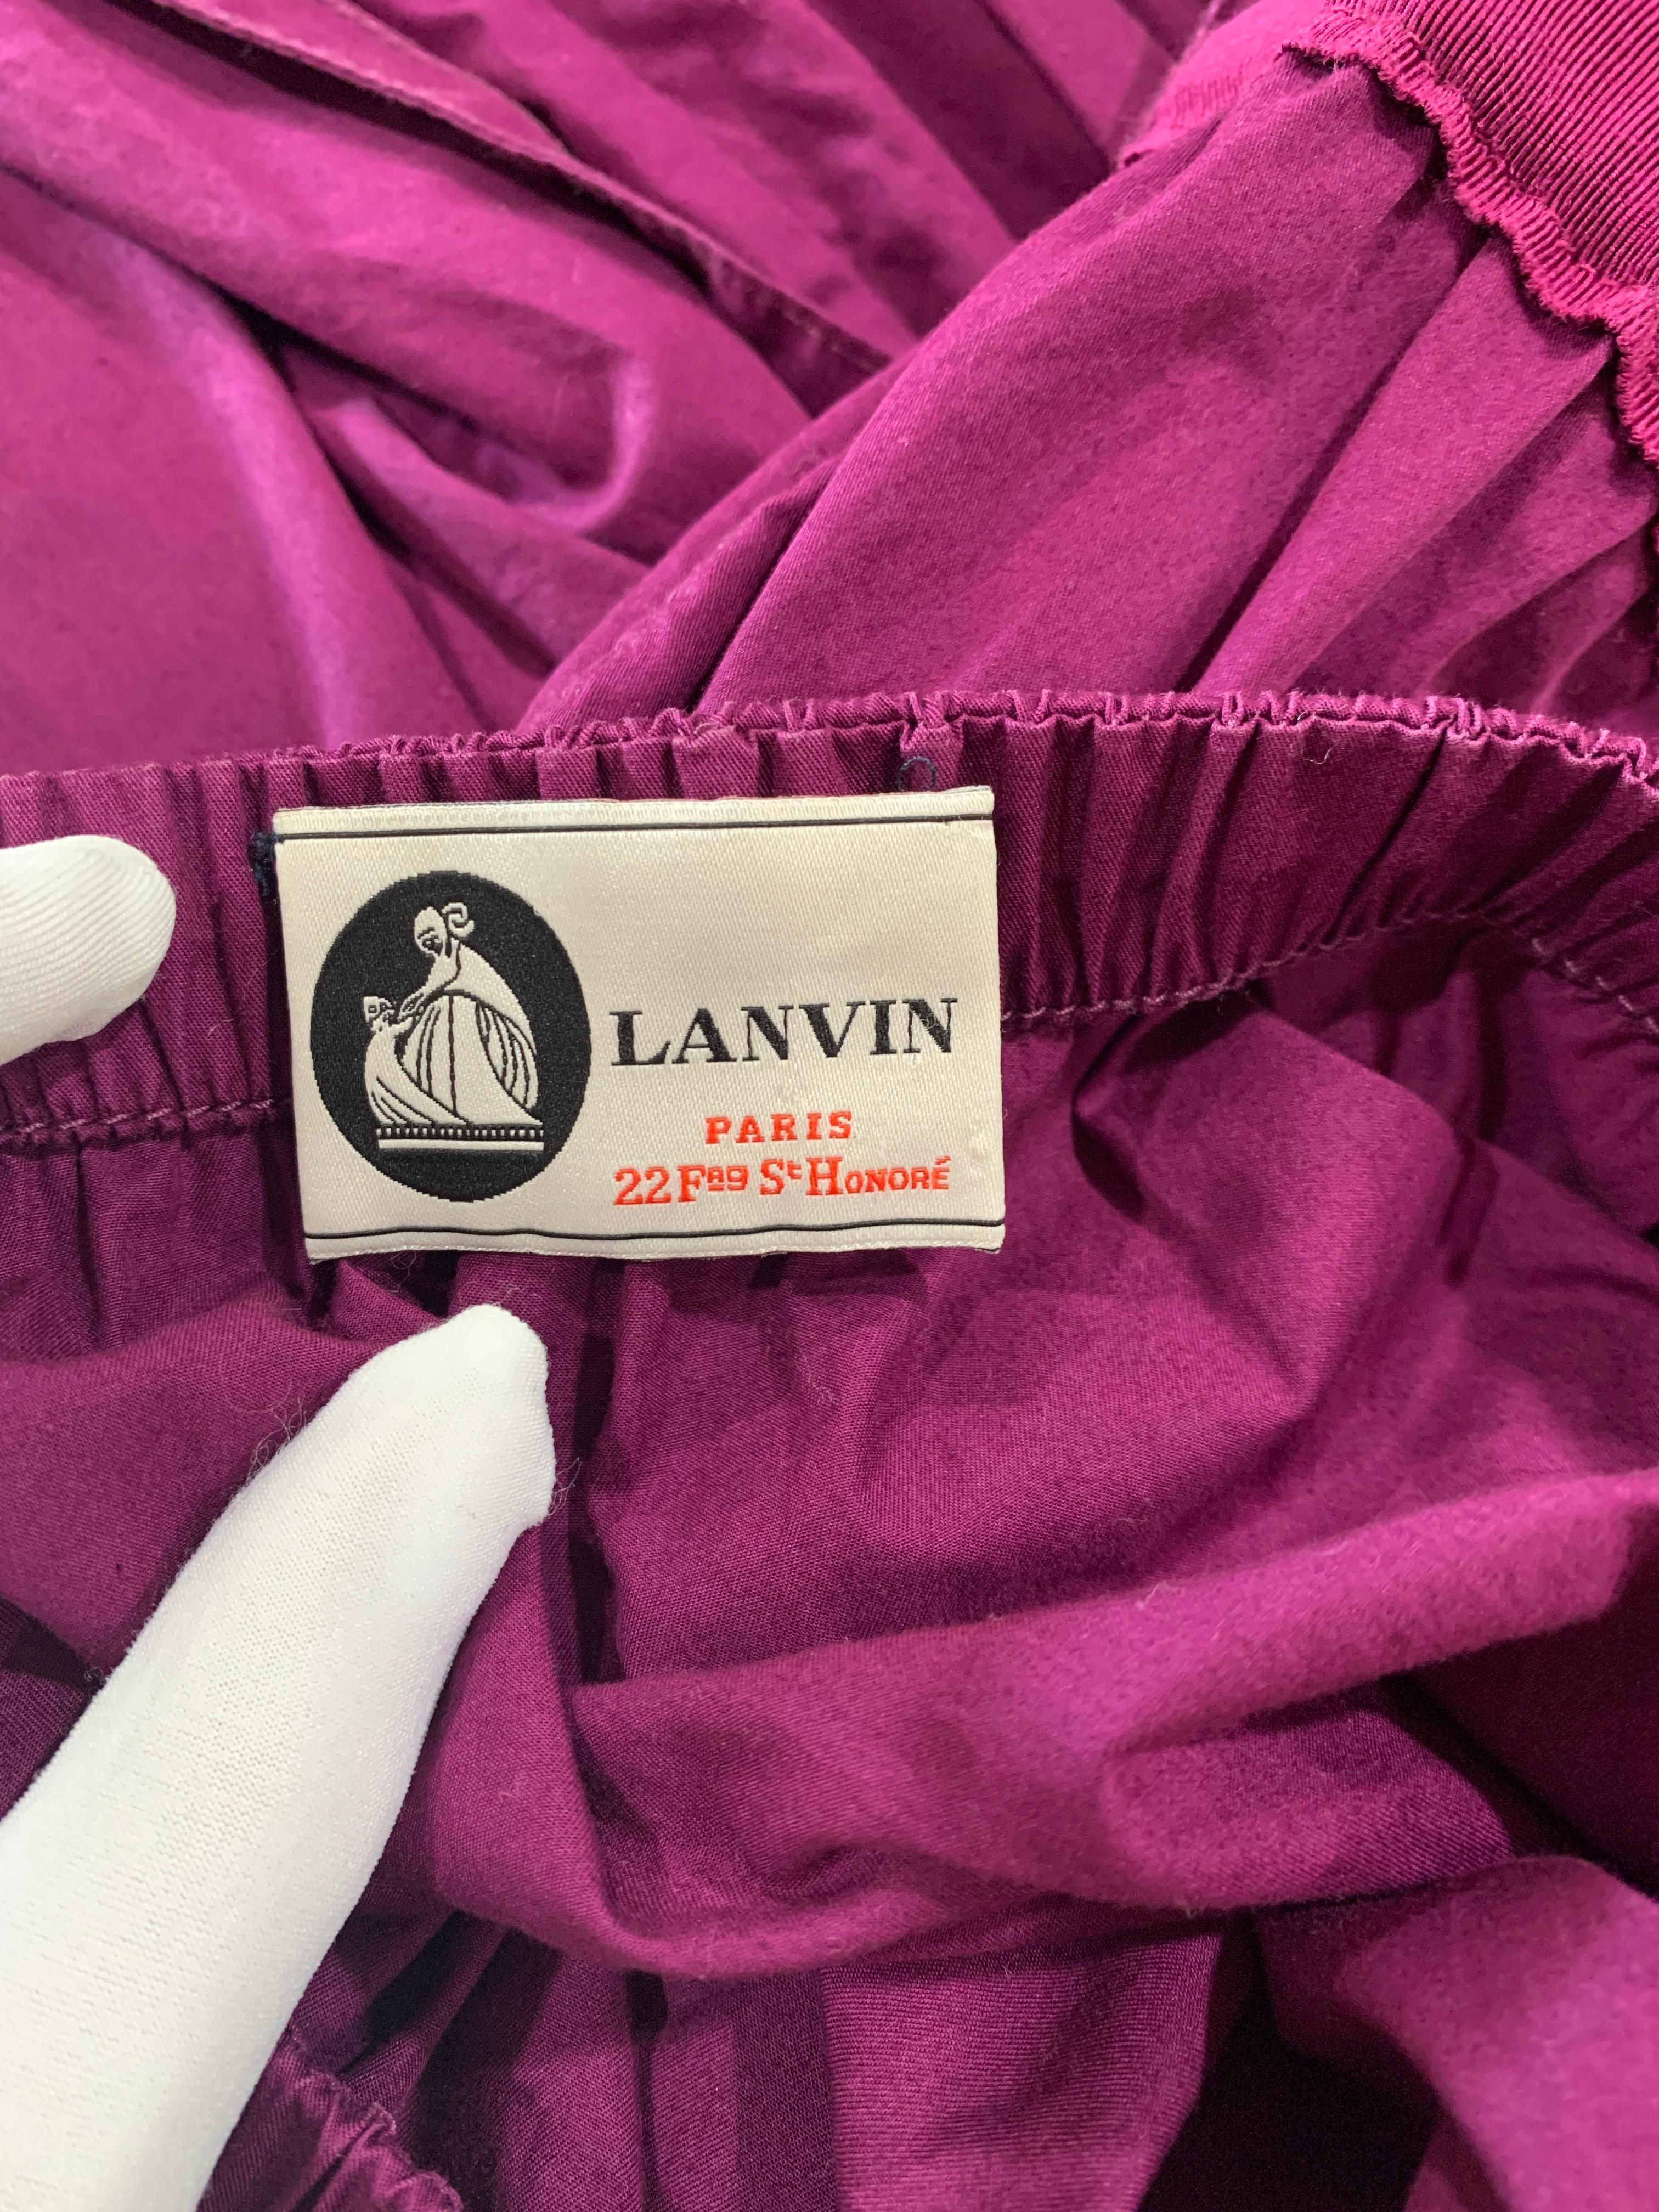 Lanvin Purple Cotton Summer Day Dress  For Sale 3